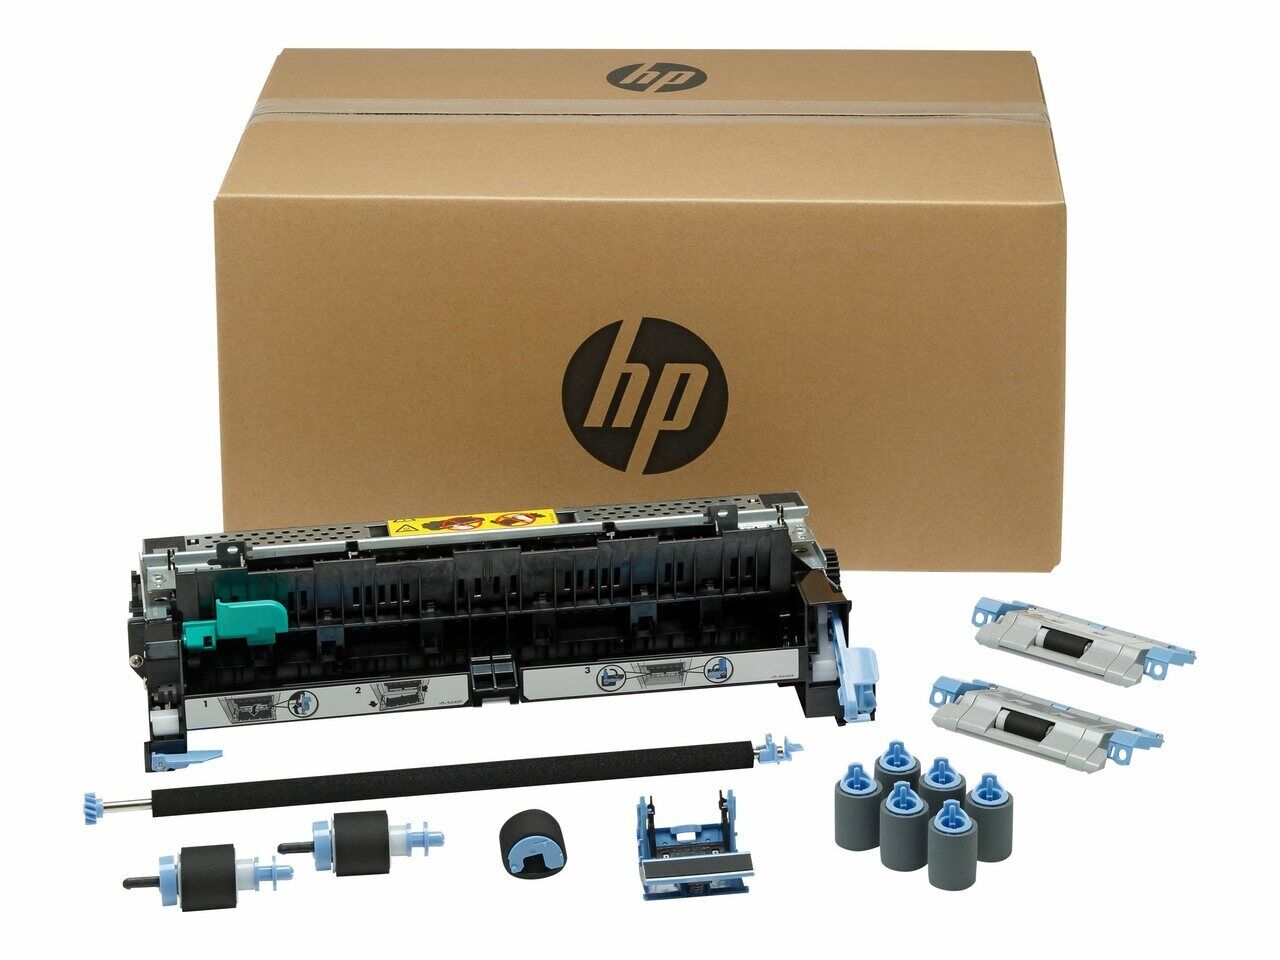 HP Q7832A LaserJet M500 MFP Printer Fuser Maintenance Kit 110 / 120V Q7832-67901